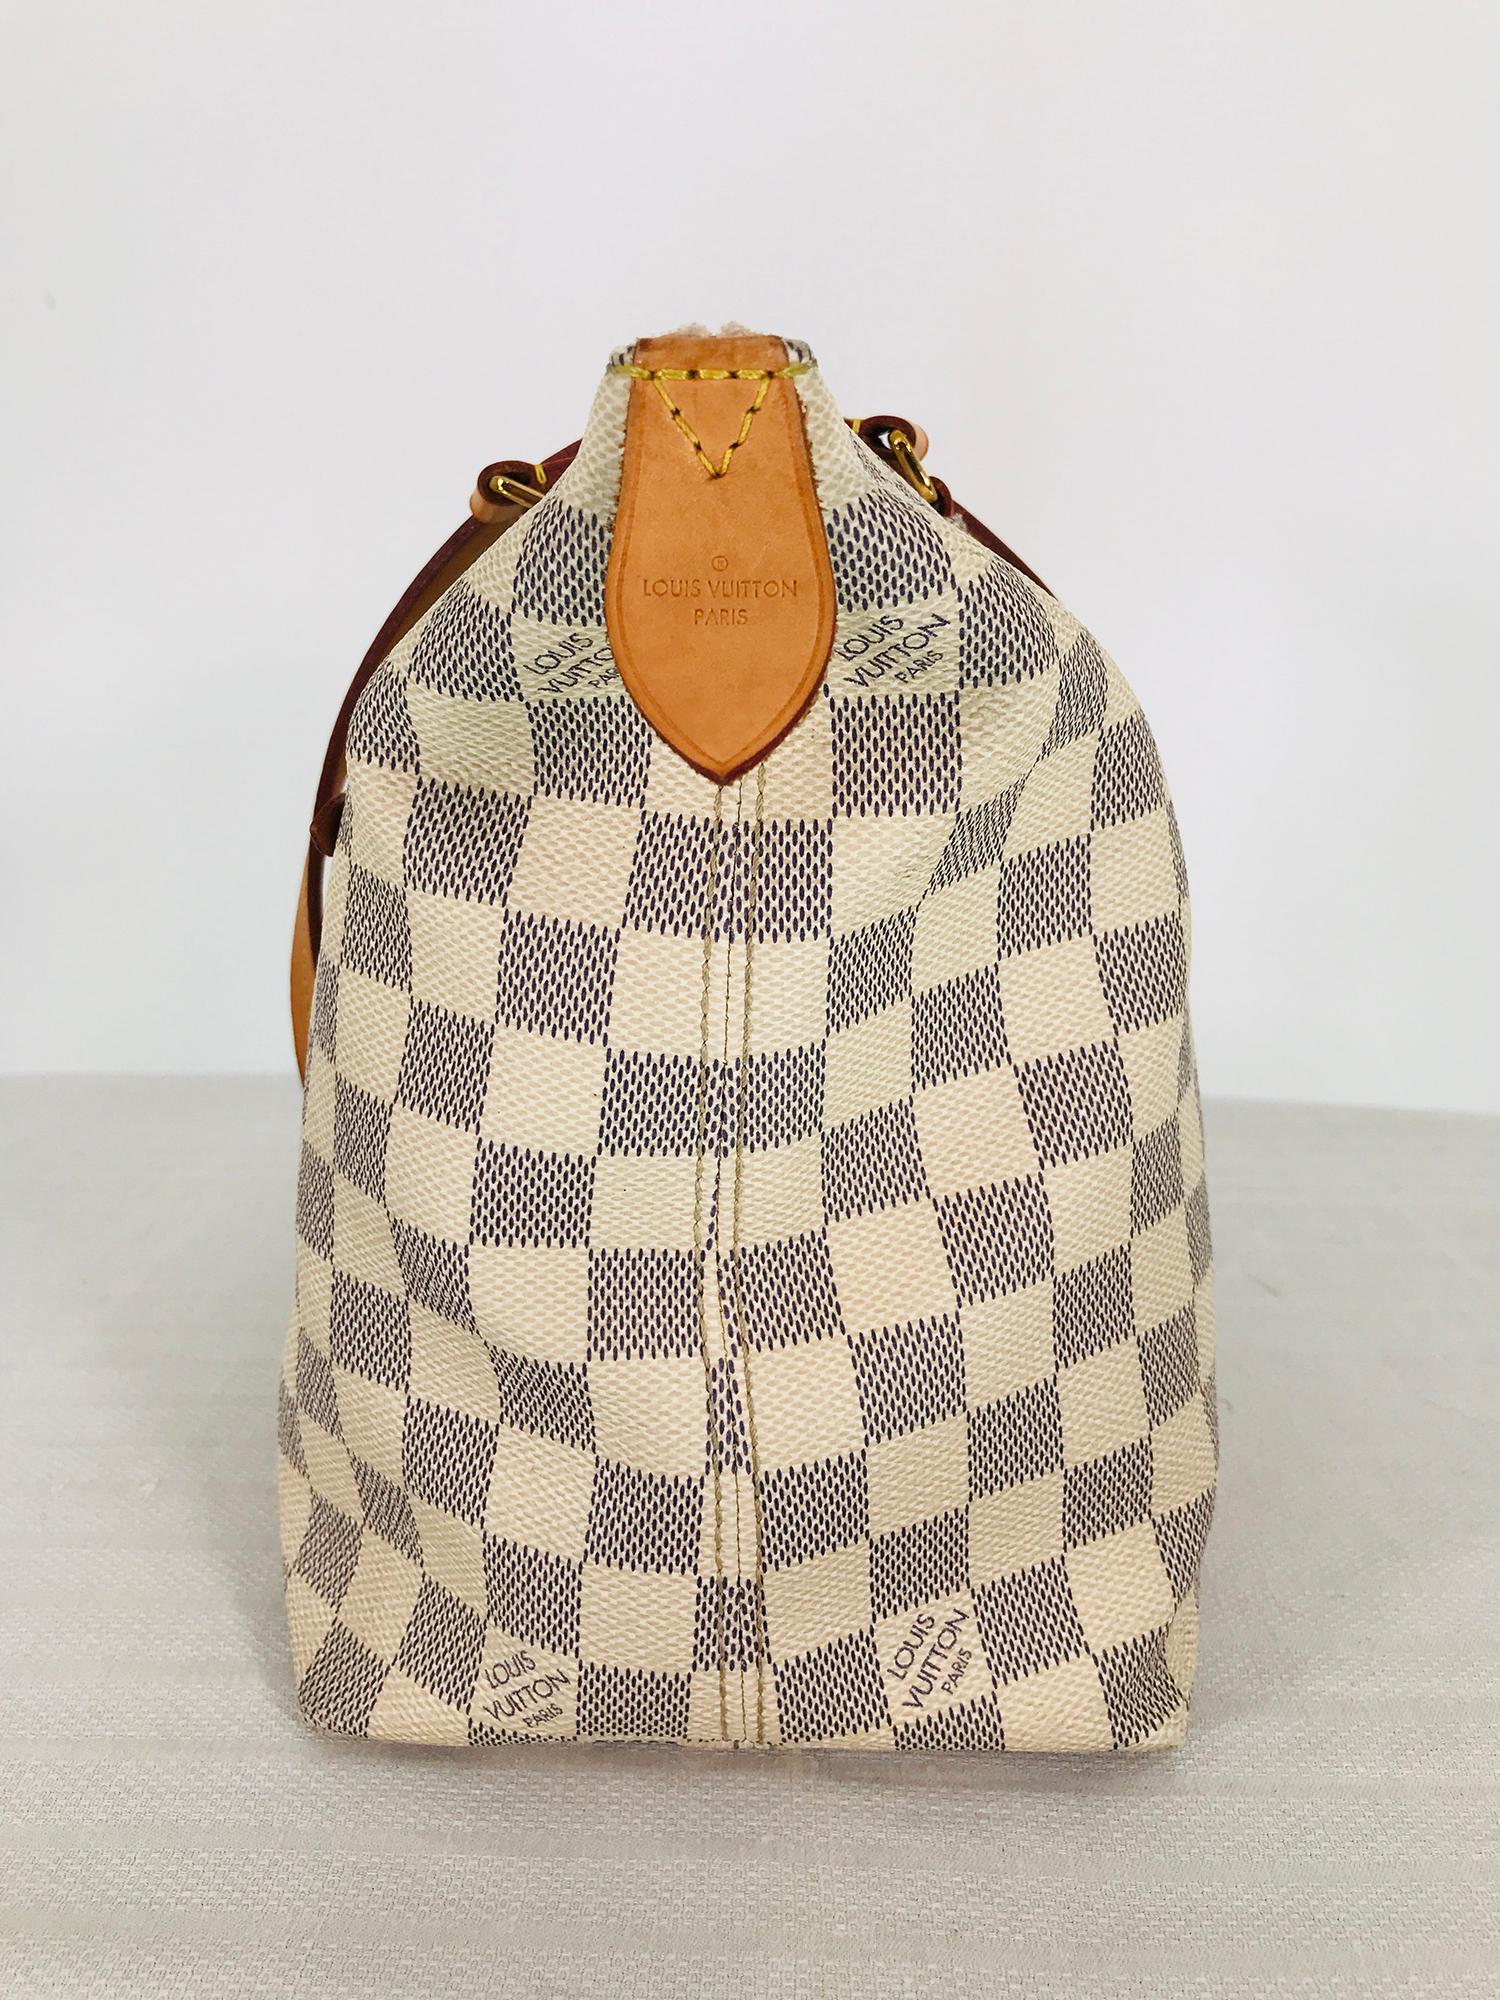 Louis Vuitton Damier Azur Lena Canvas PM Handbag In Good Condition For Sale In West Palm Beach, FL